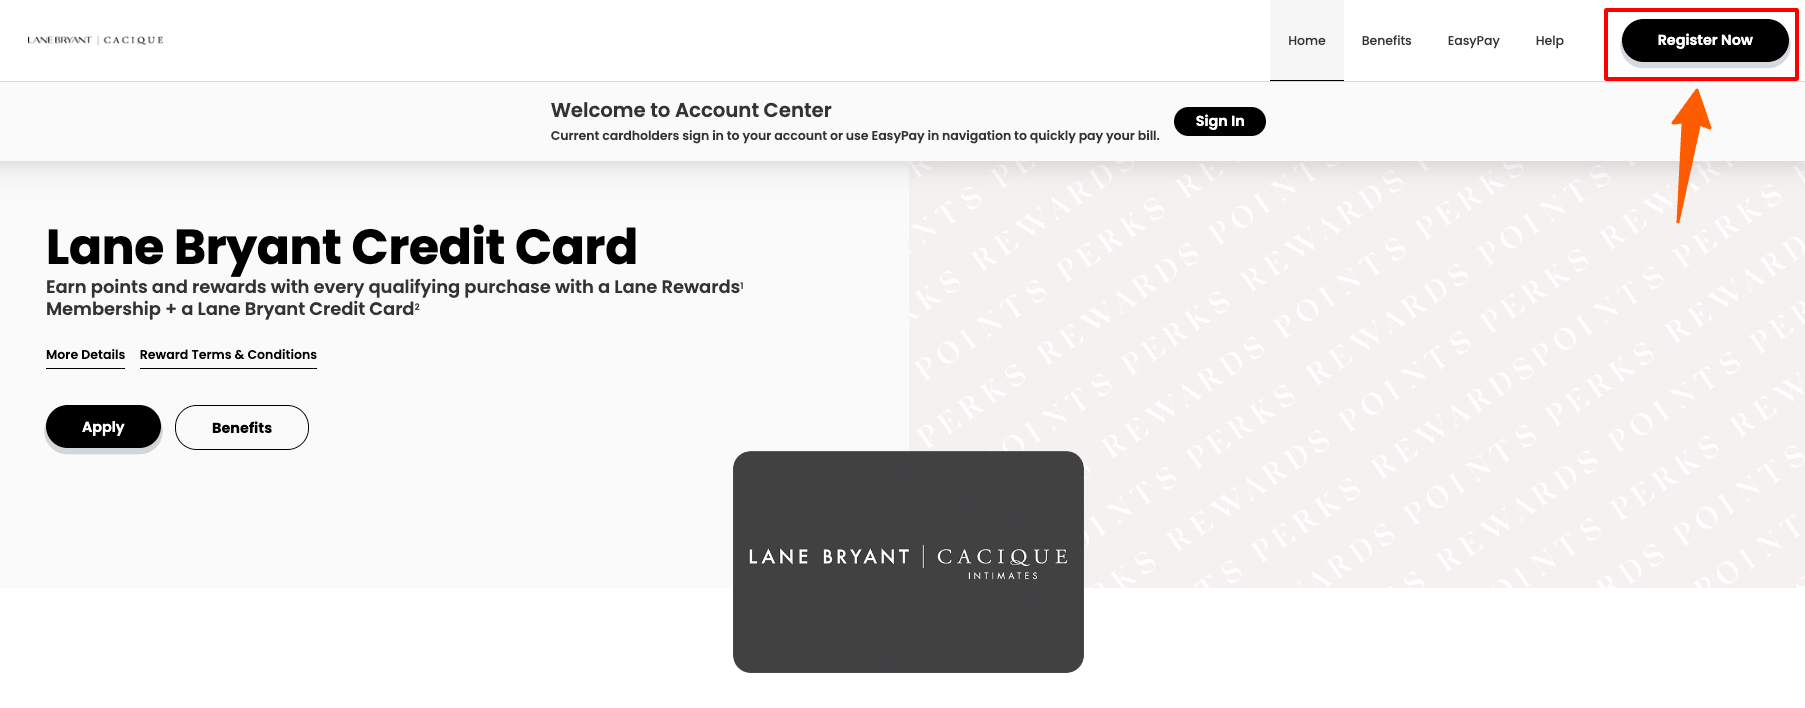 Lane Bryant Credit Card register